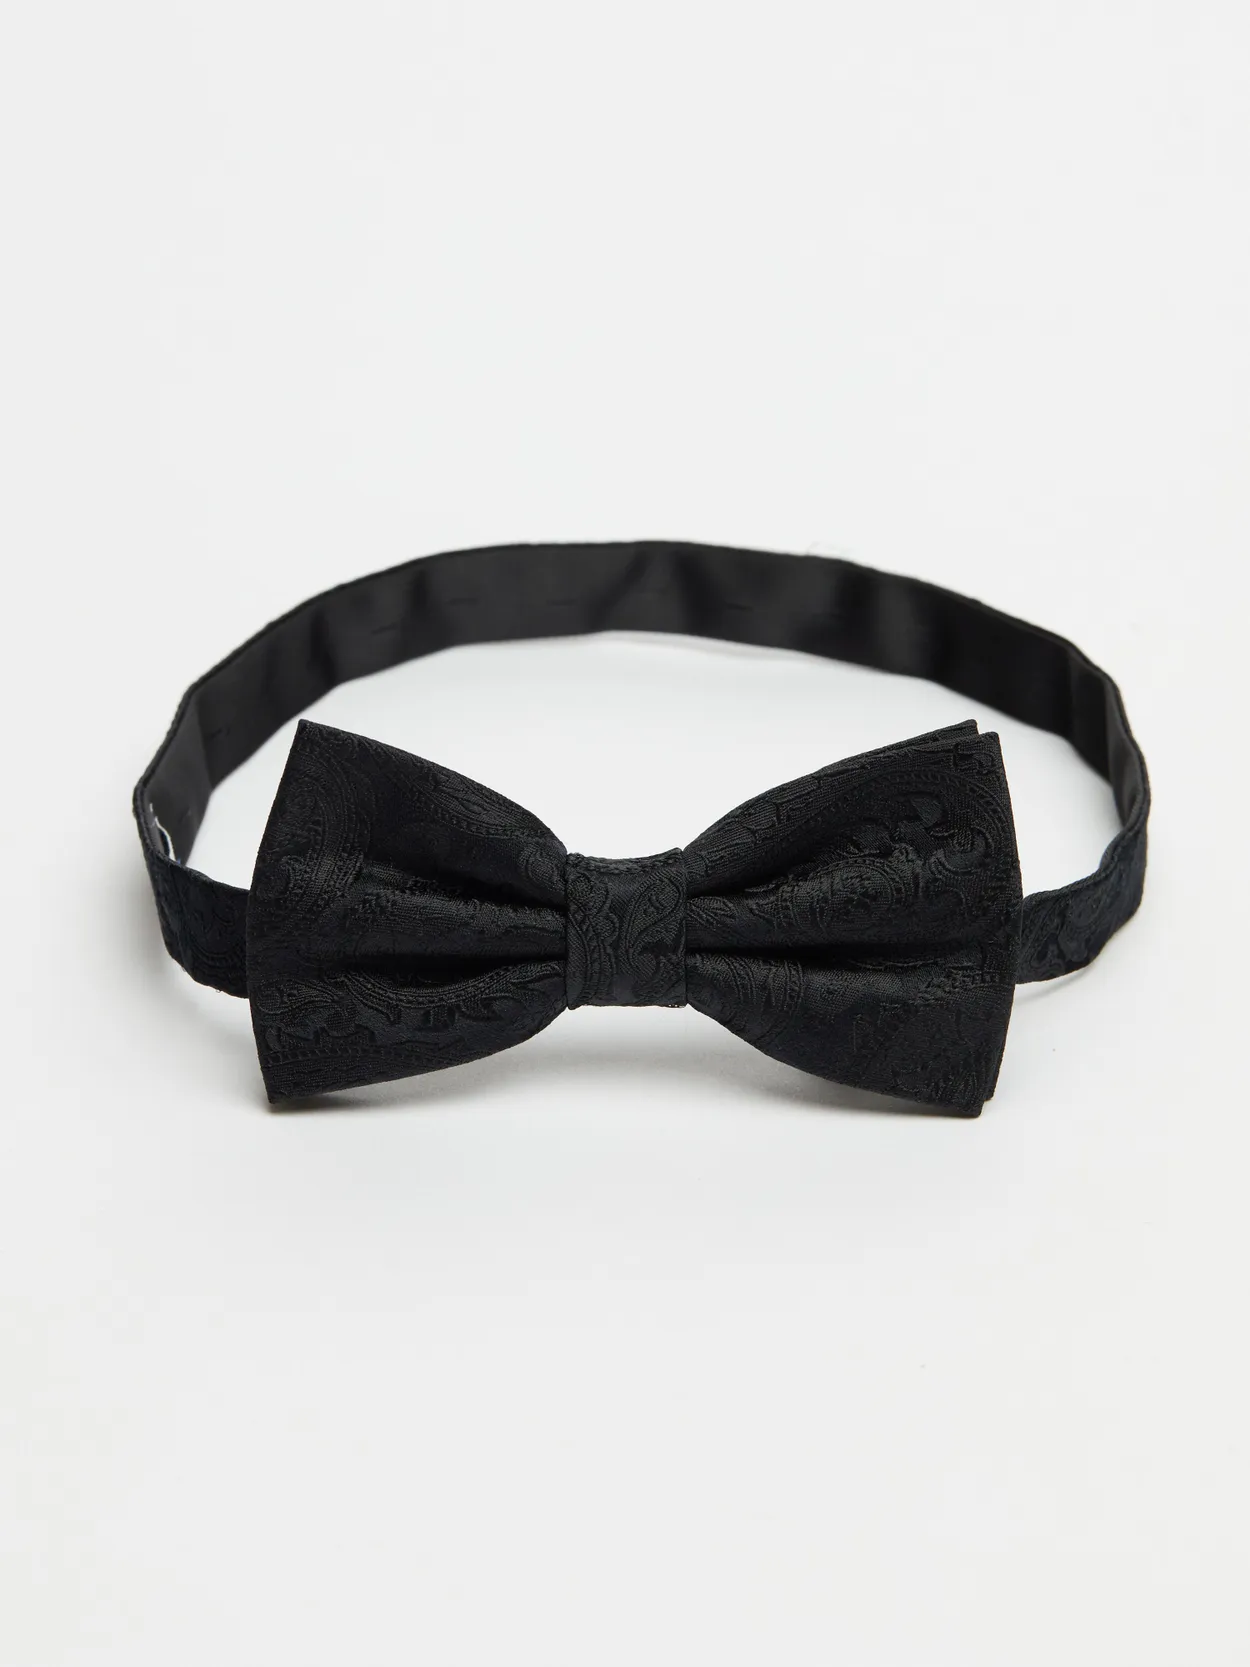 Black Bow Tie Formal